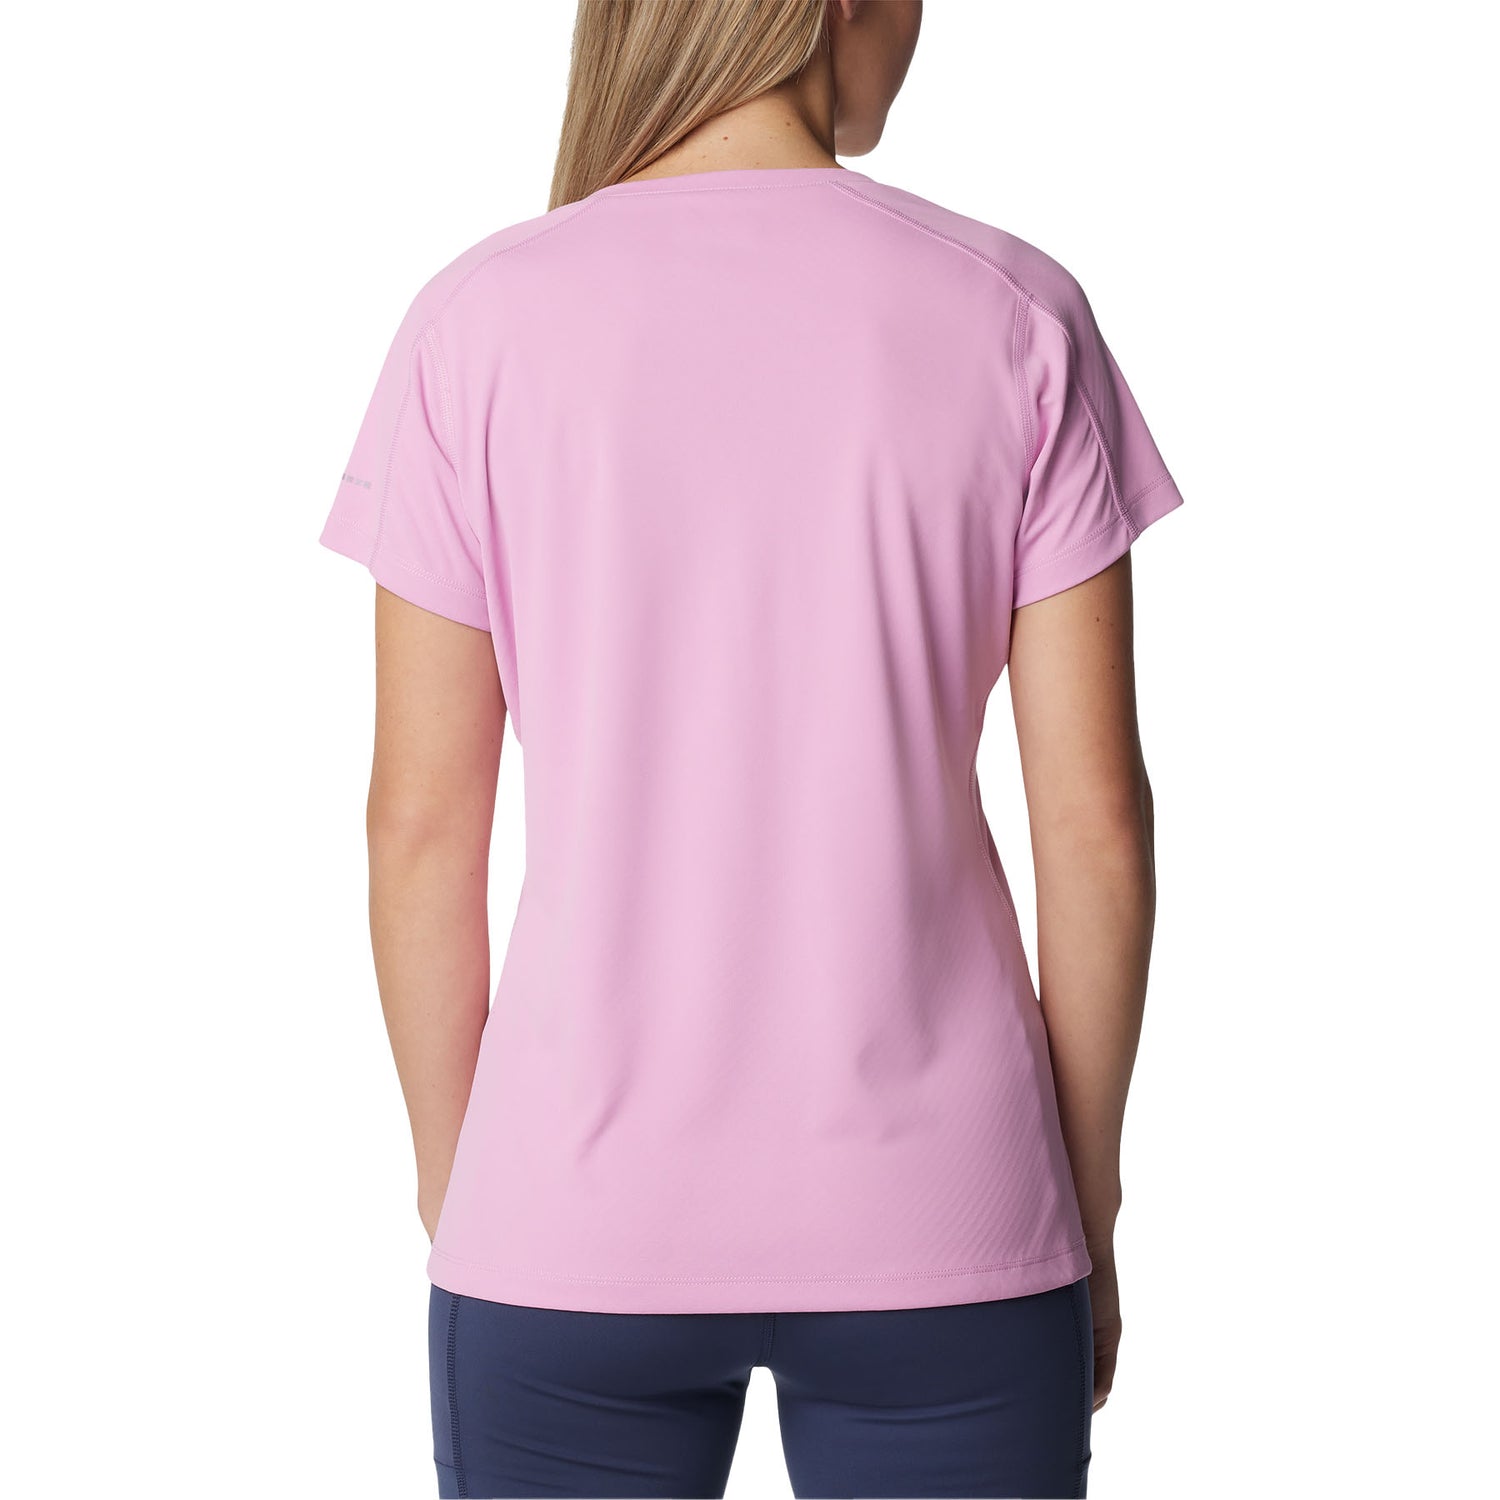 Columbia Women's Zero Rules Short Sleeve Technical T-shirt 